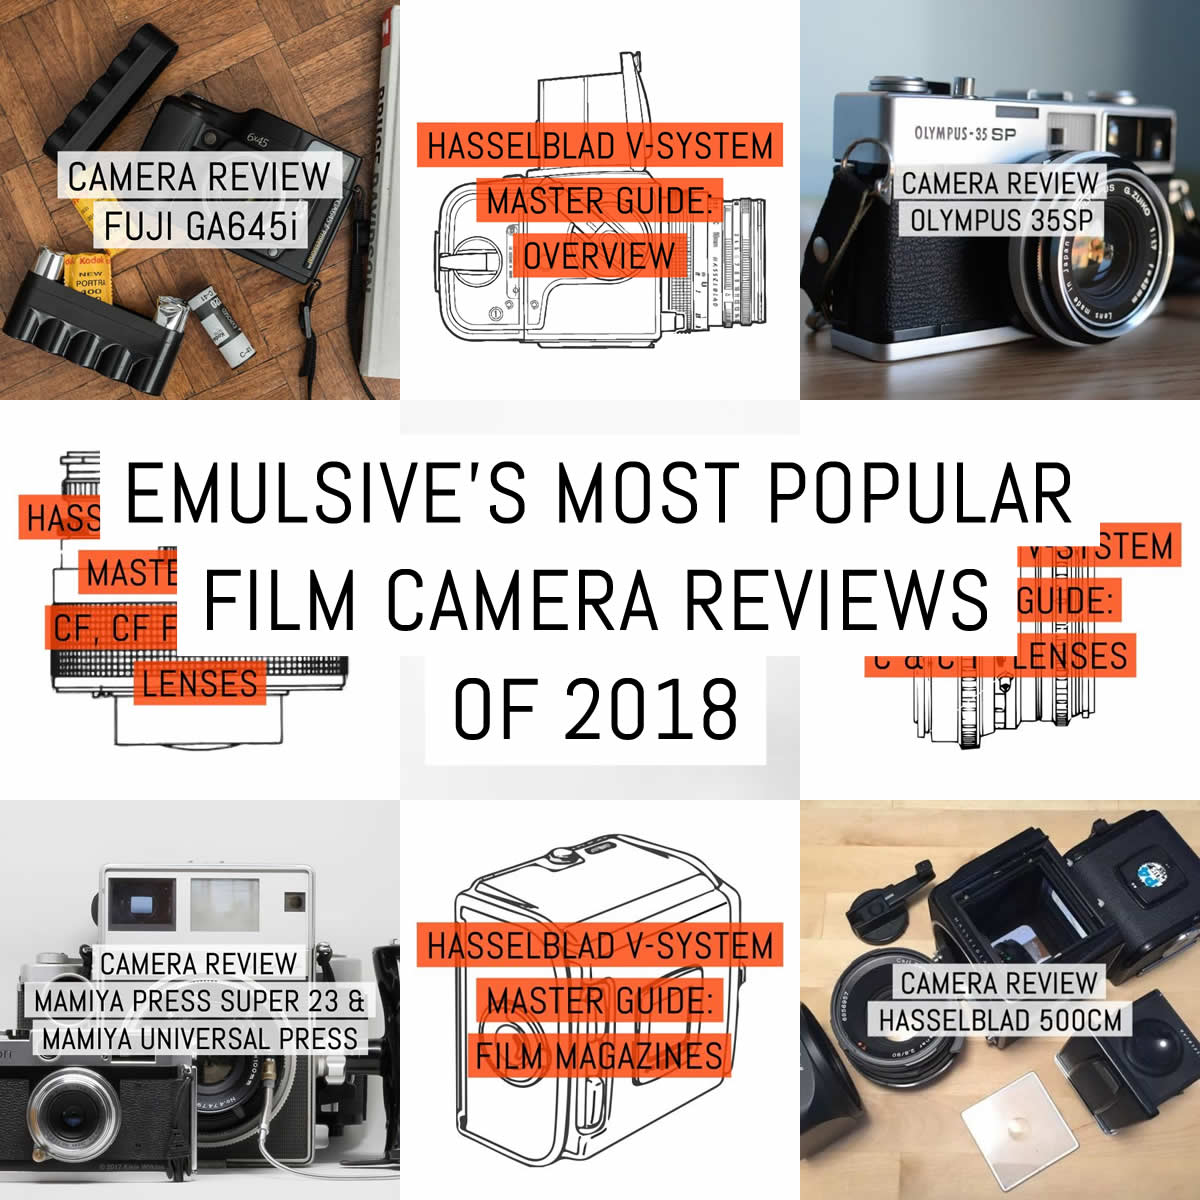 EMULSIVE’s most popular film camera reviews of 2018